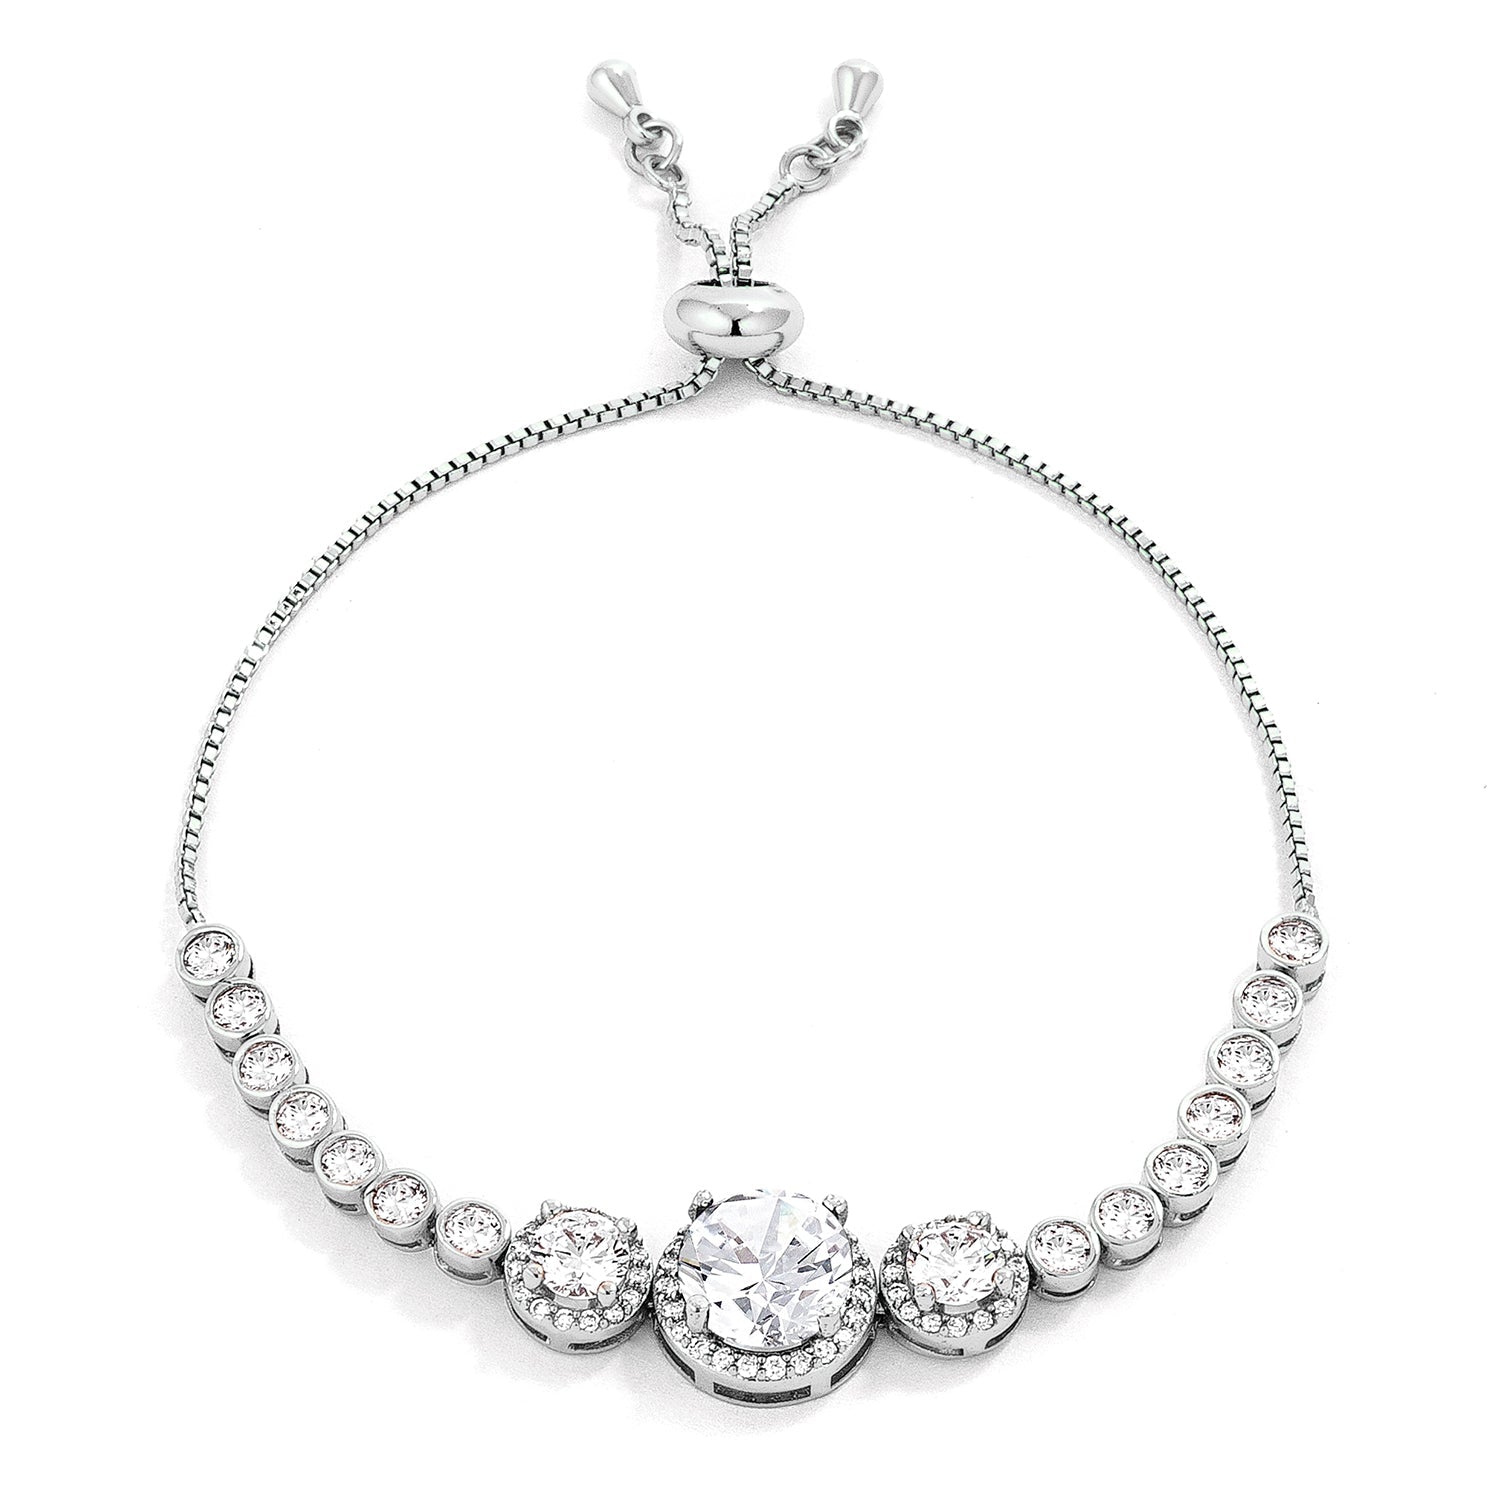 Adjustable Rhodium Plated Graduated Clear CZ Bolo Style Tennis Bracelet - LinkagejewelrydesignLinkagejewelrydesign